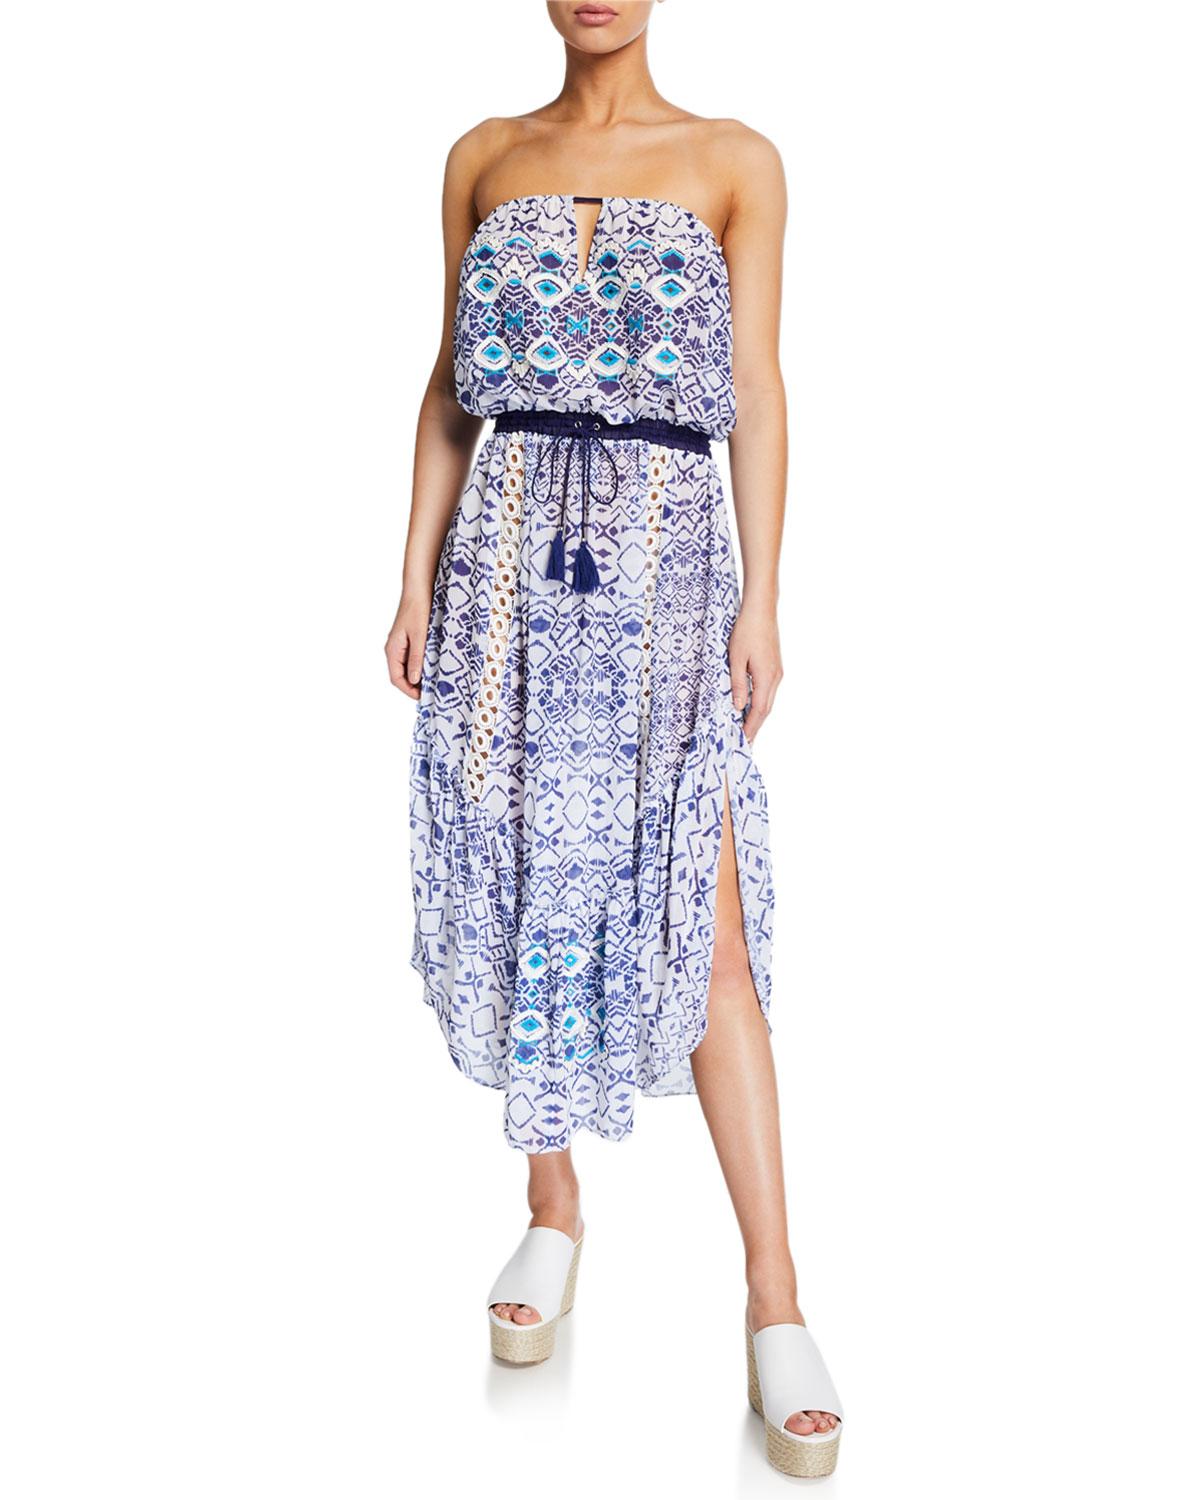 Ramy Brook Luna Printed Strapless Dress in Blue - Lyst